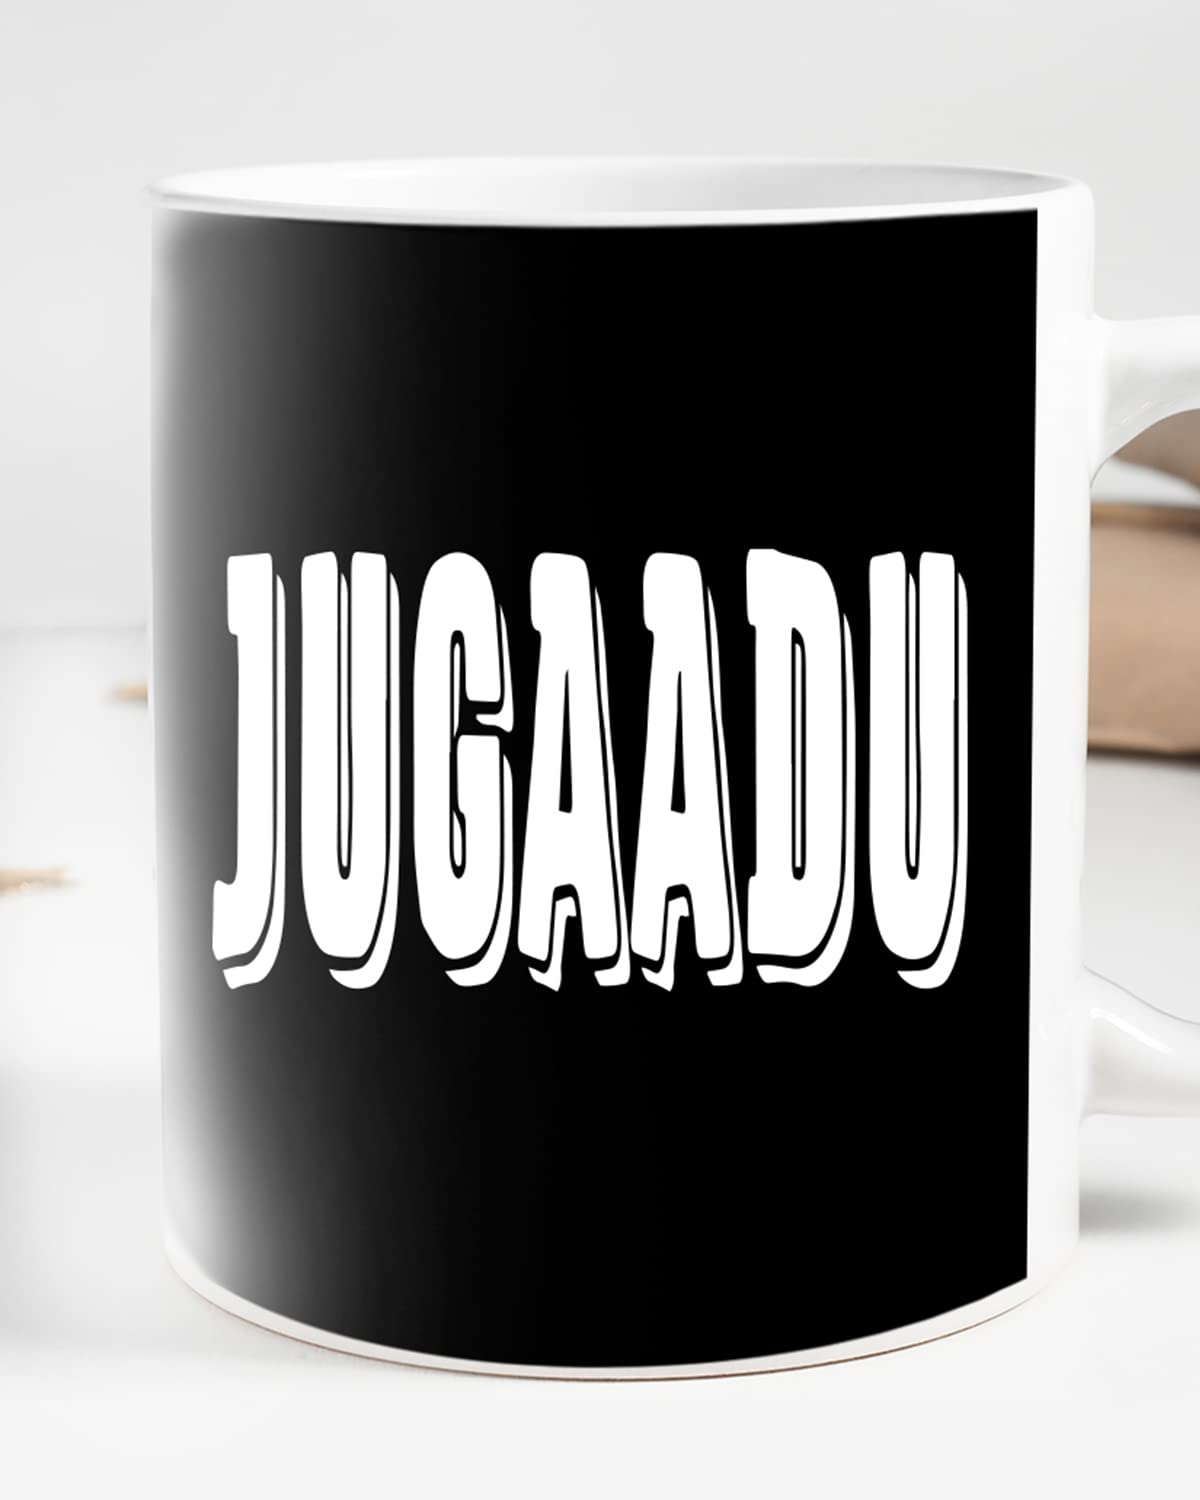 JUGAADU Coffee Mug - Gift for Friend, Birthday Gift, Birthday Mug, Motivational Quotes Mug, Mugs with Funny & Funky Dialogues, Bollywood Mugs, Funny Mugs for Him & Her